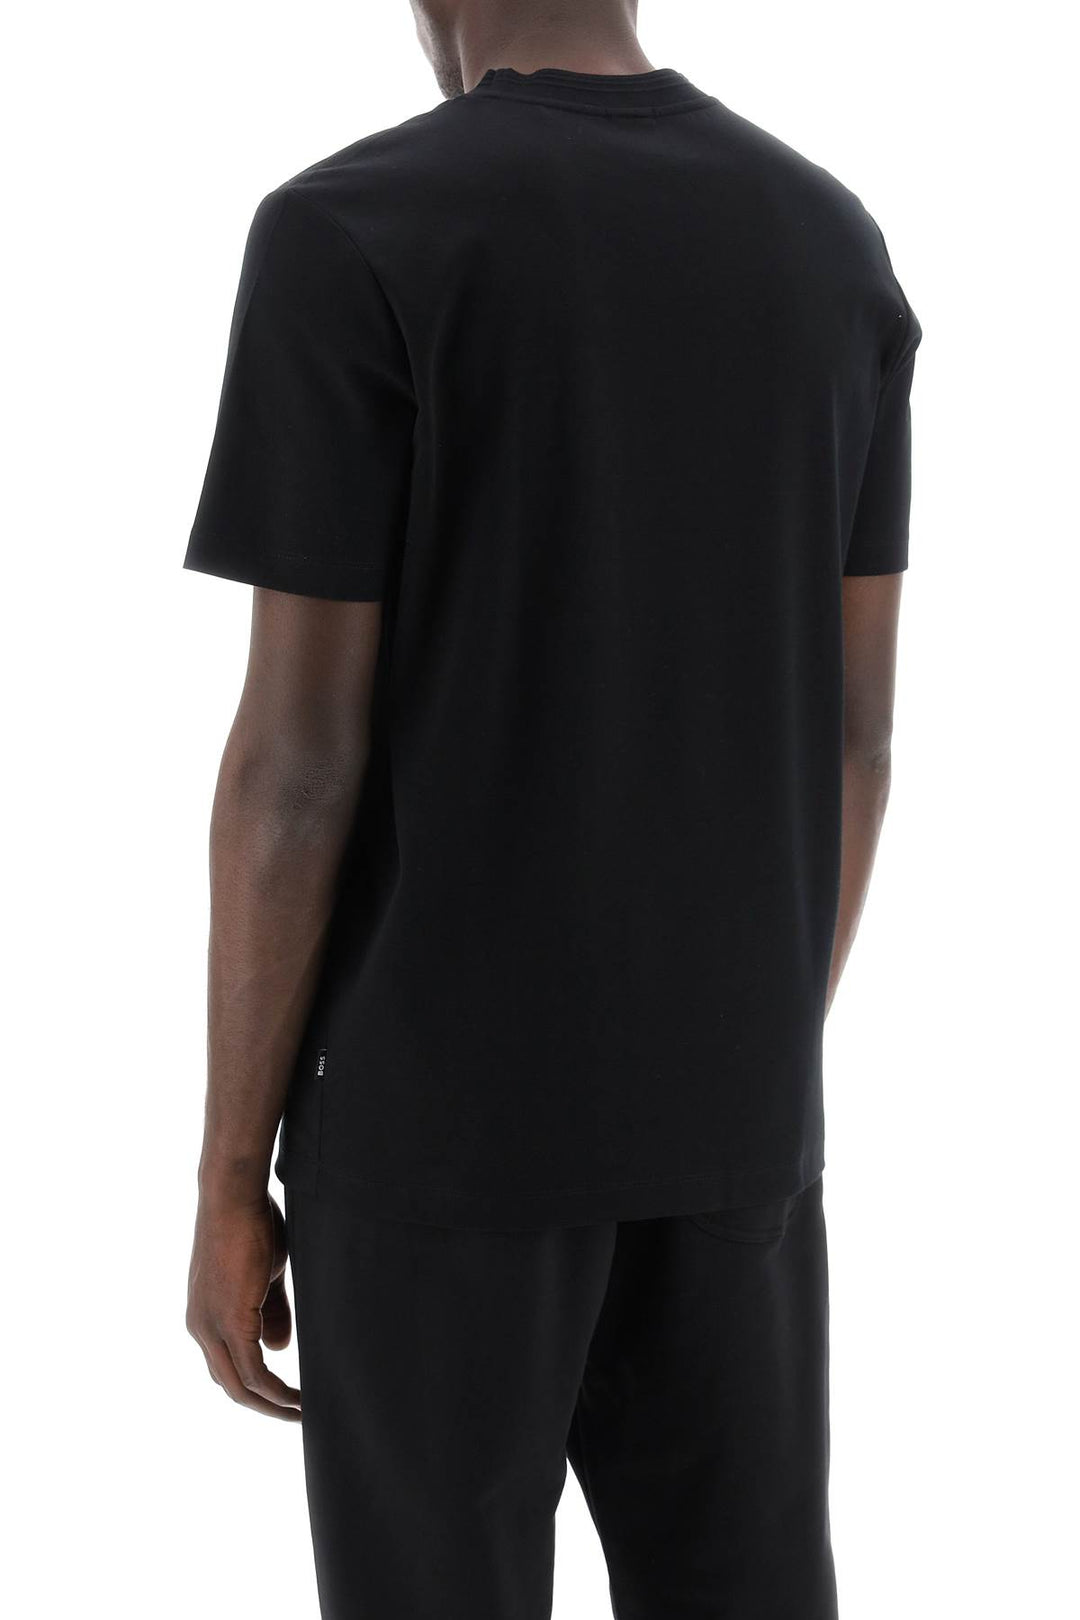 Boss Regular Fit T Shirt With Patch Design   Black